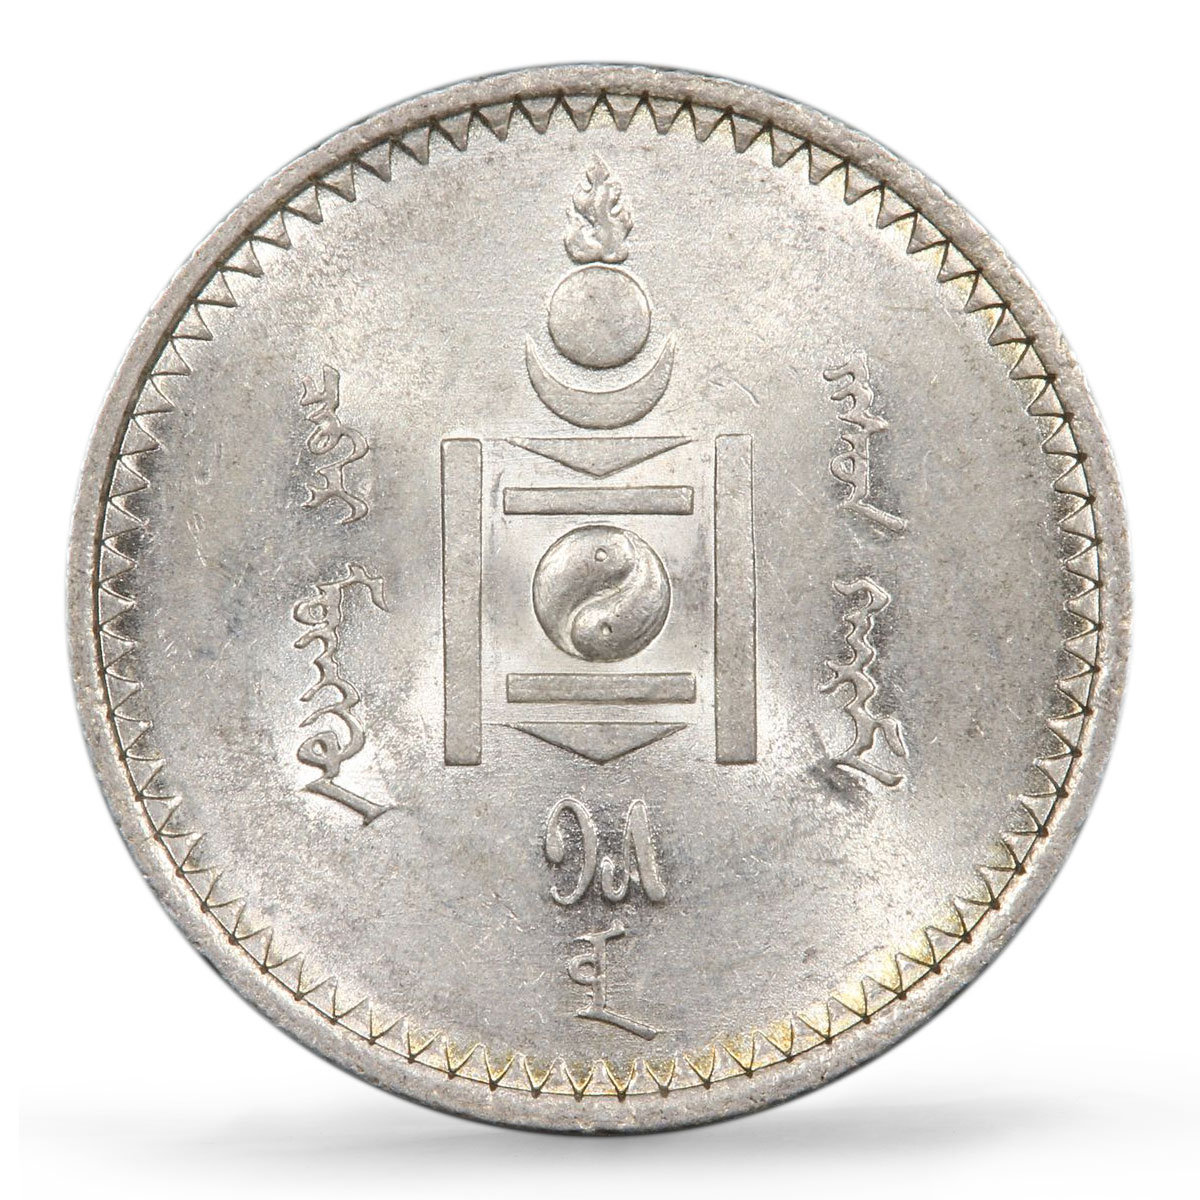 Mongolia 50 mongo Republic Regular Coinage KM-7 MS62 PCGS silver coin 1925